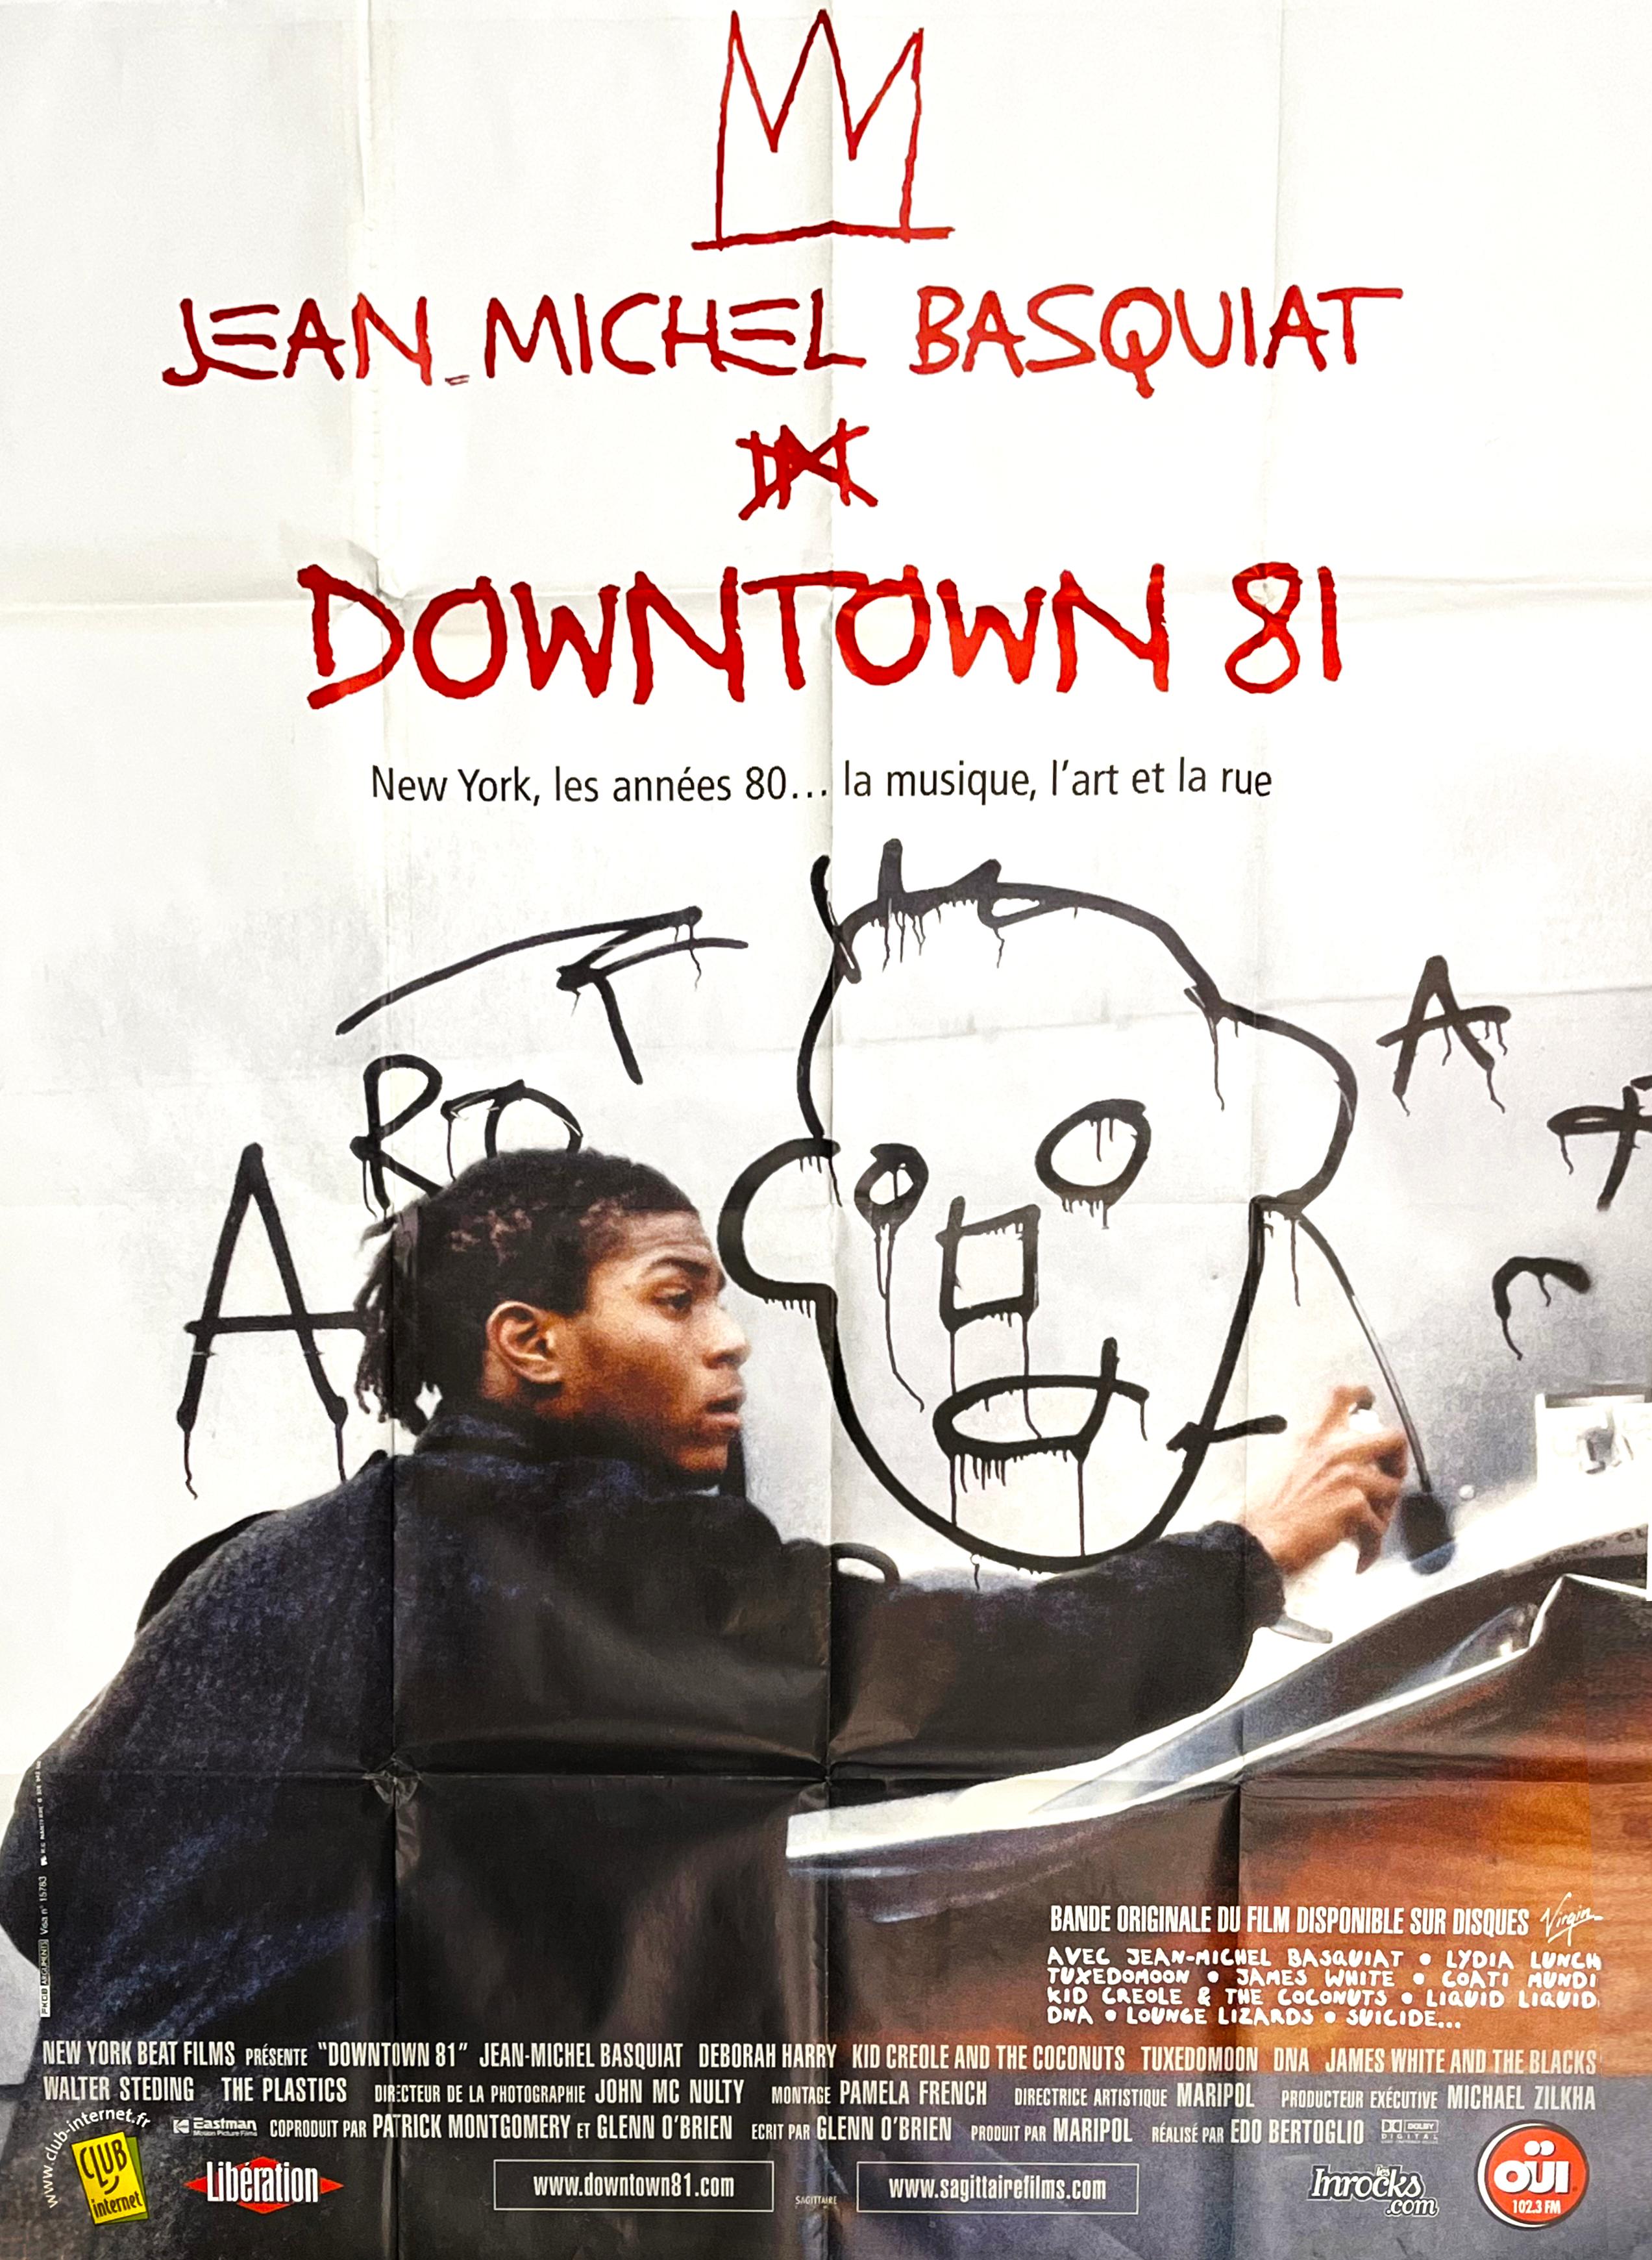 Basquiat Downtown 81 film poster (vintage Basquiat)  - Print by Jean-Michel Basquiat